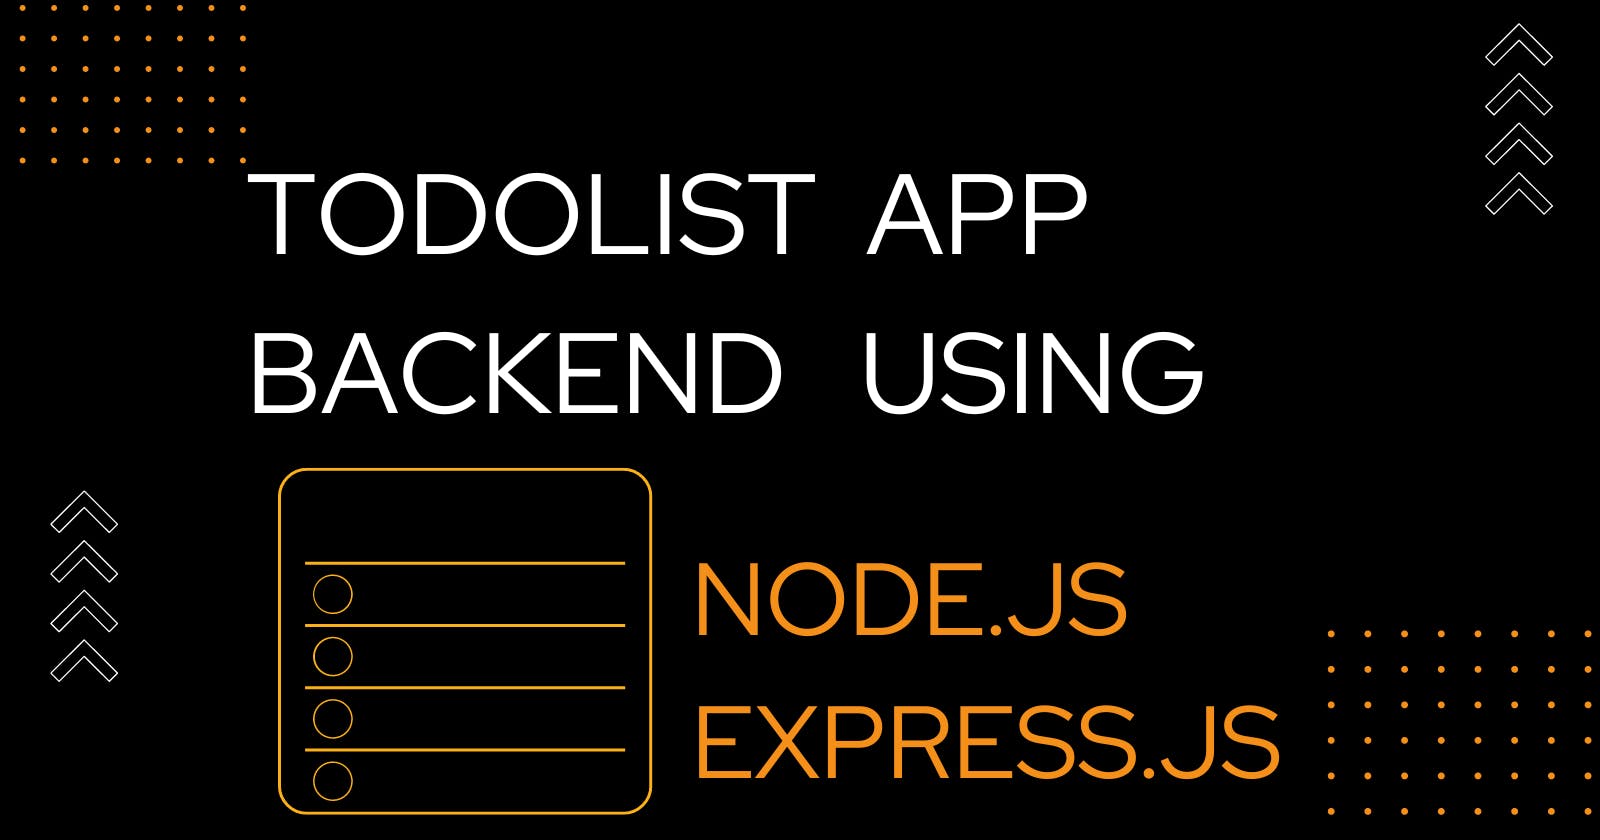 Todo list app backend using Node.js and Express.js